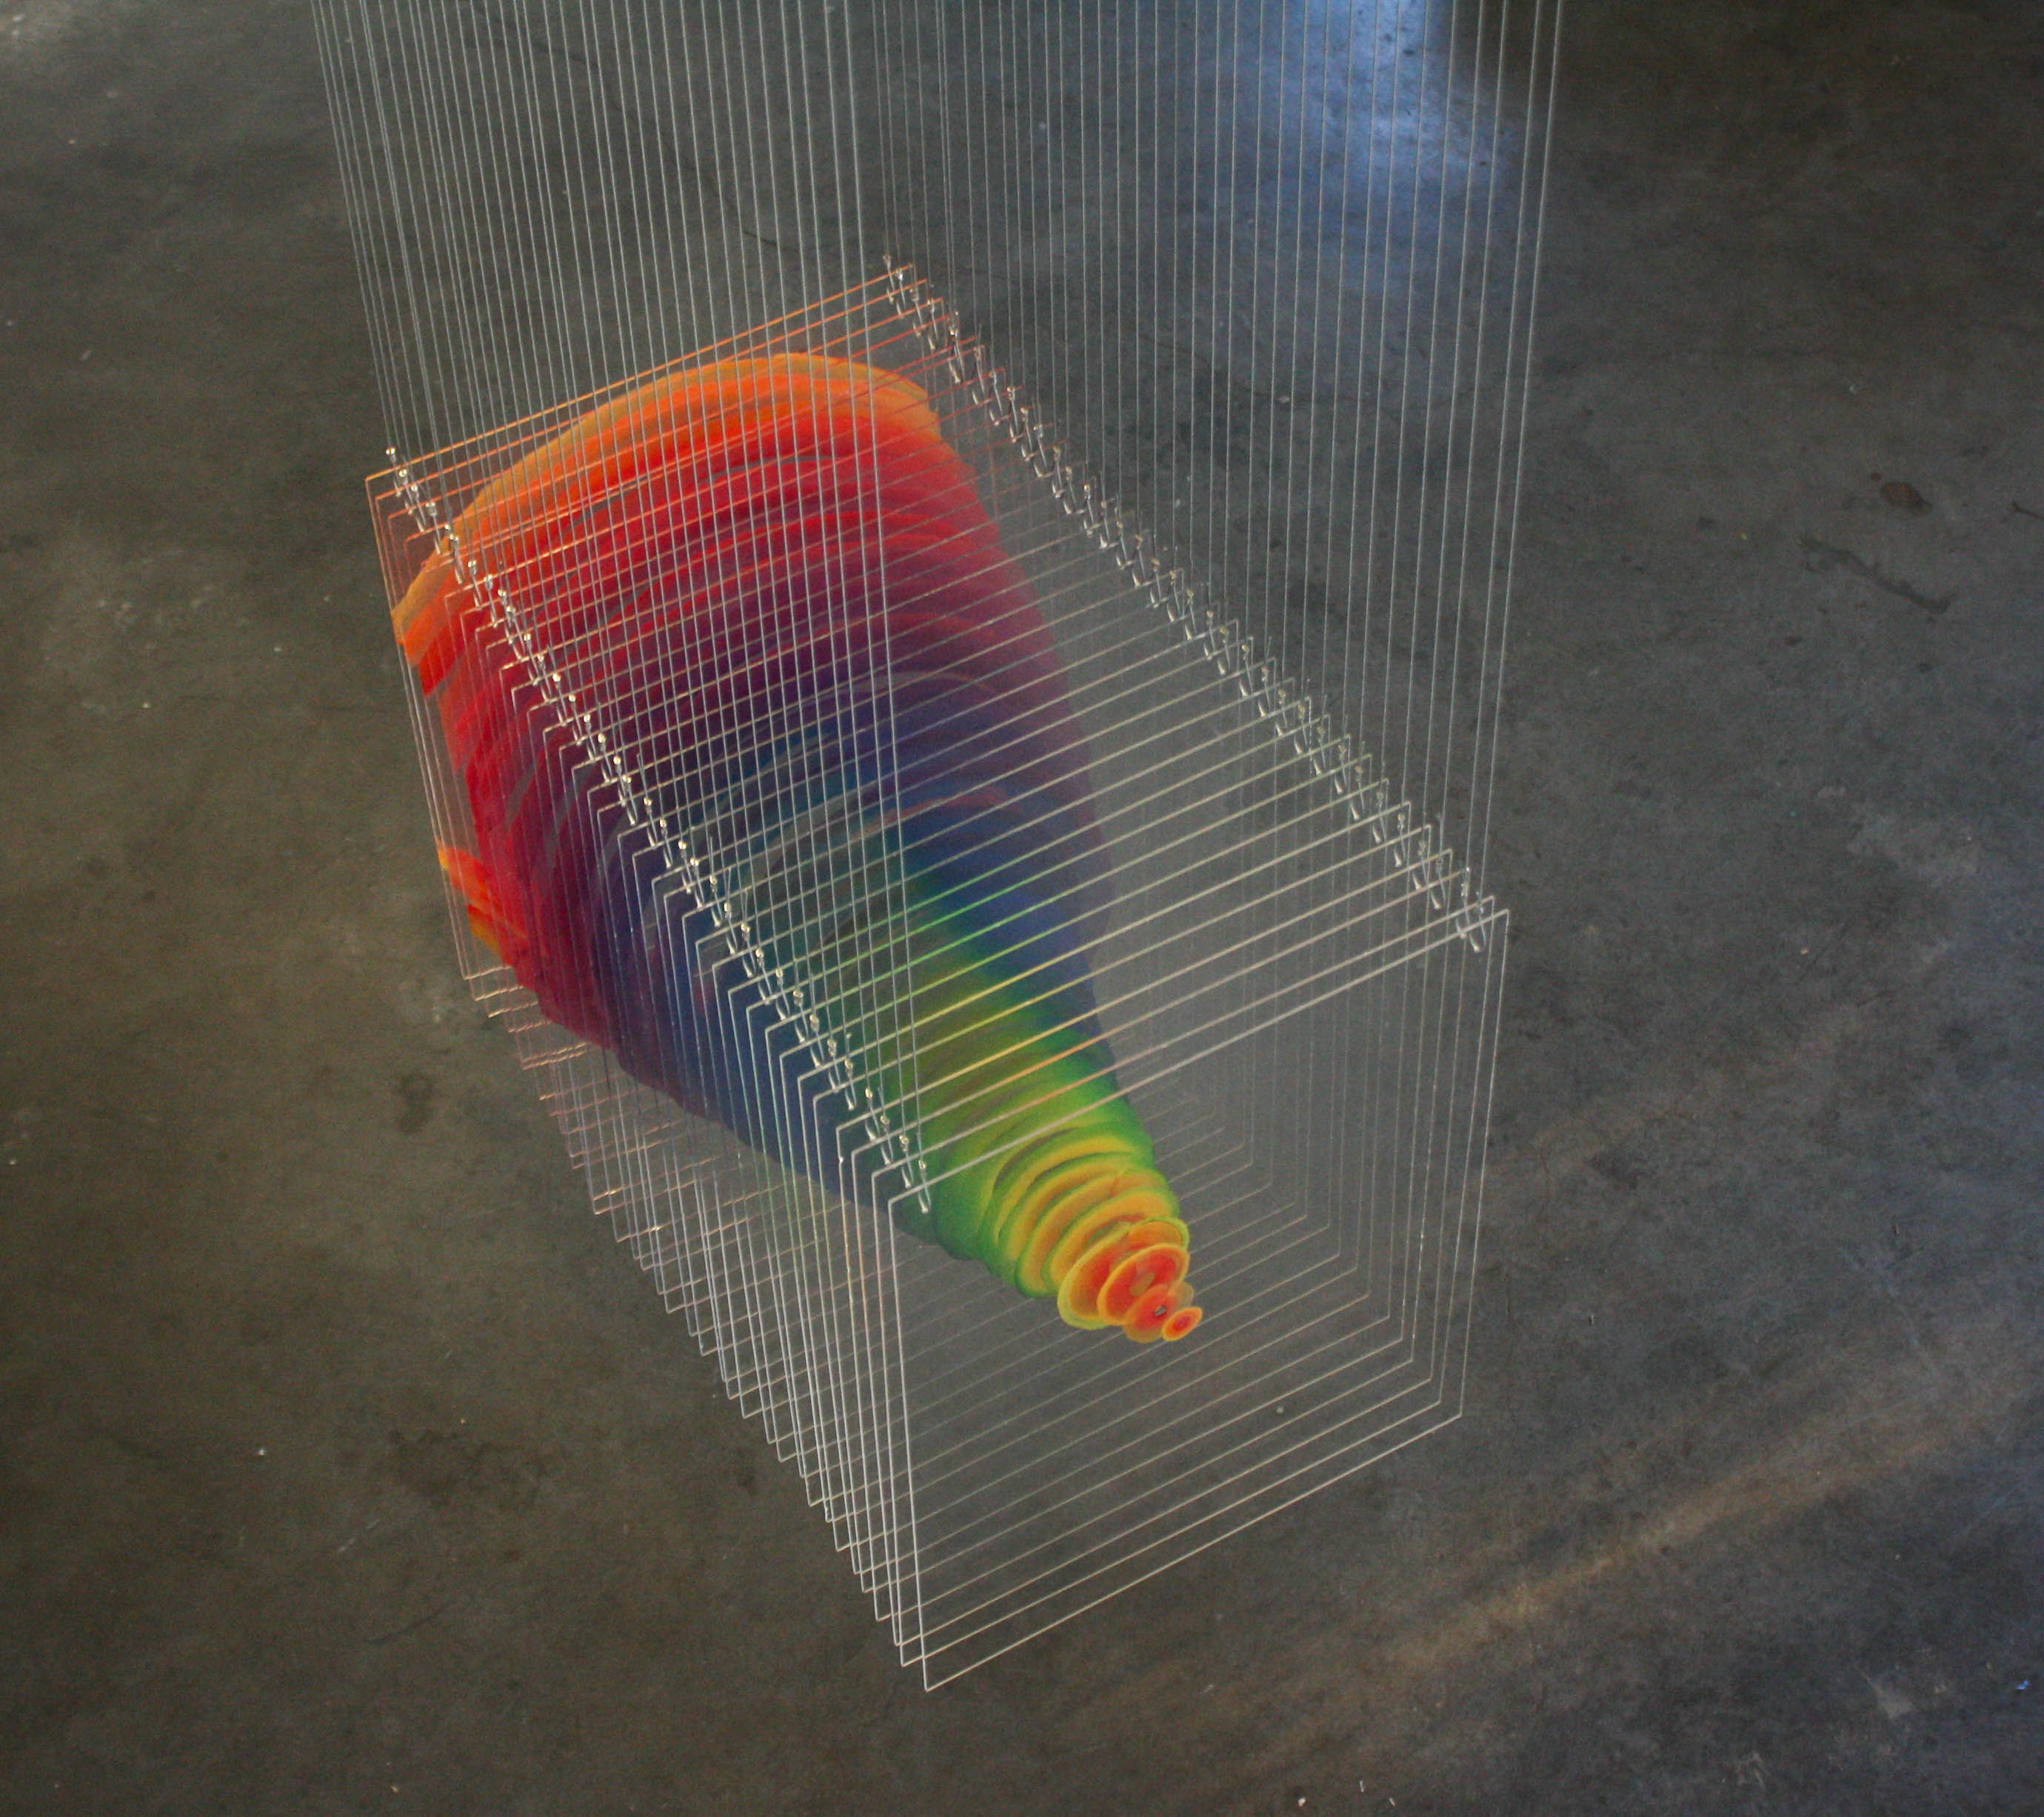 Duncan McDaniel, Spectral Vortex, 2021, 35”x 20”x 24”, acrylic on acrylic